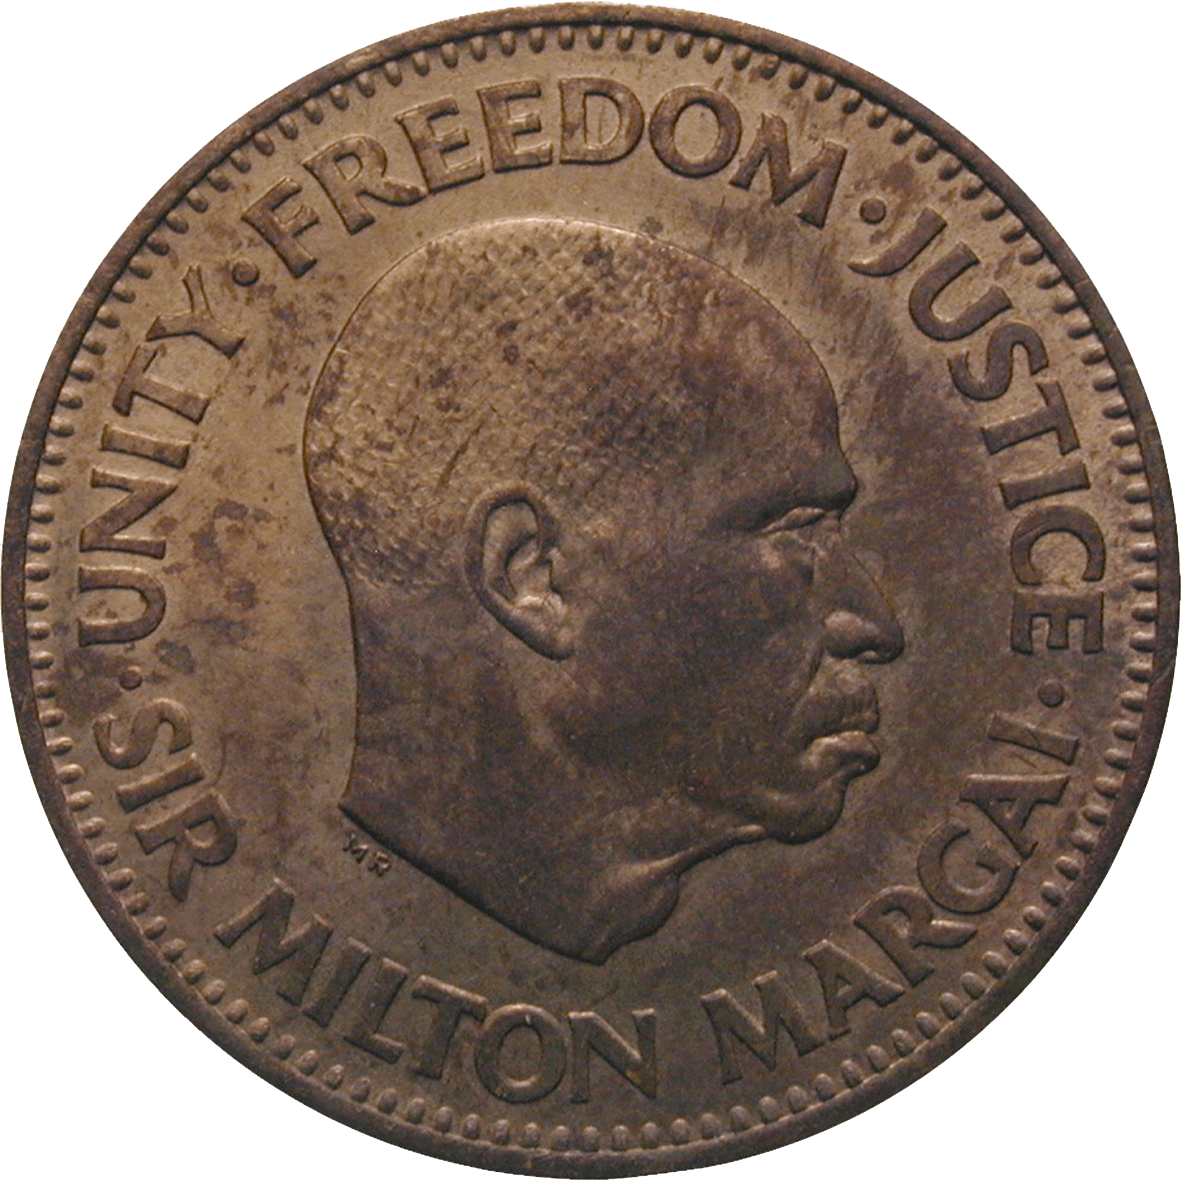 Republic of Sierra Leone, Half Cent 1964 (obverse)